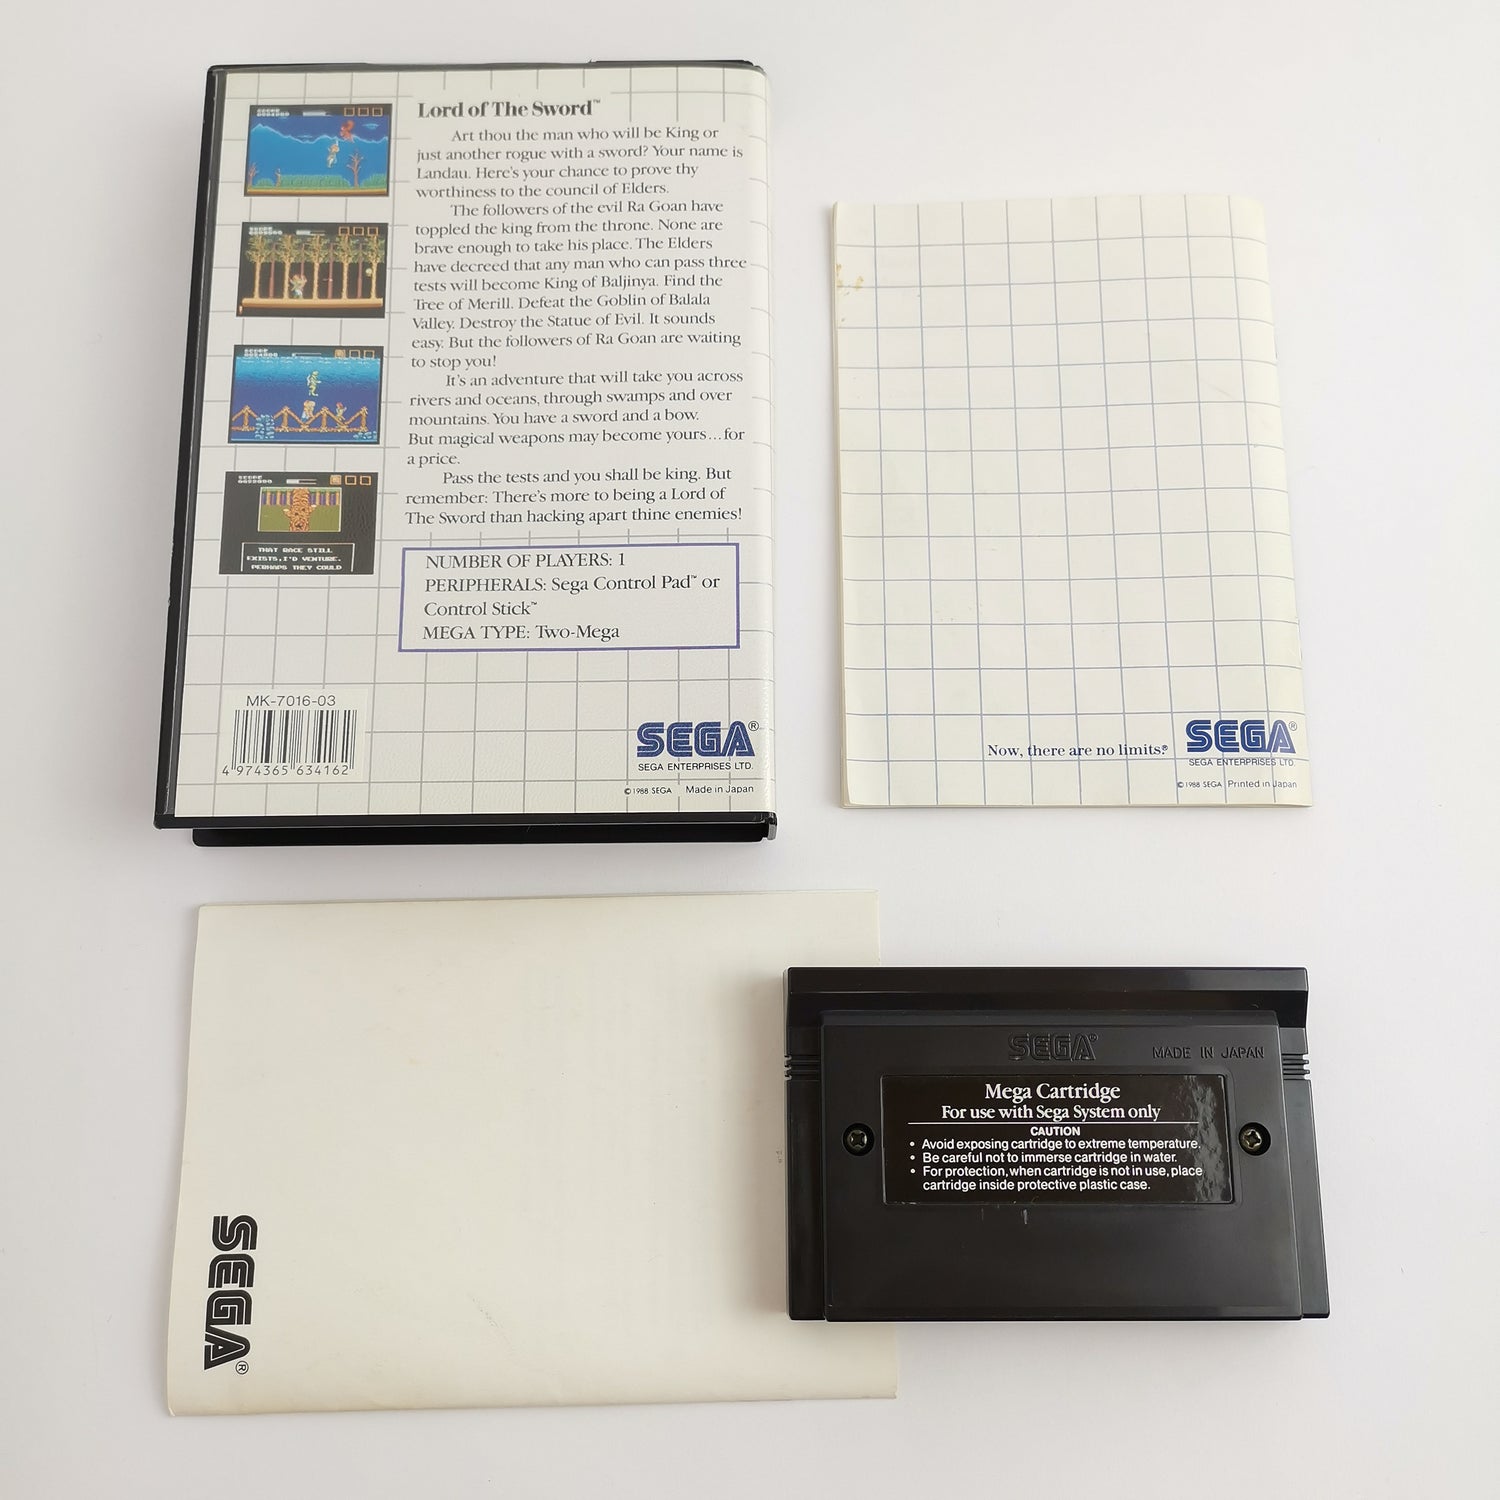 Sega Master System game: Lord of the Sword in original packaging | MS PAL version